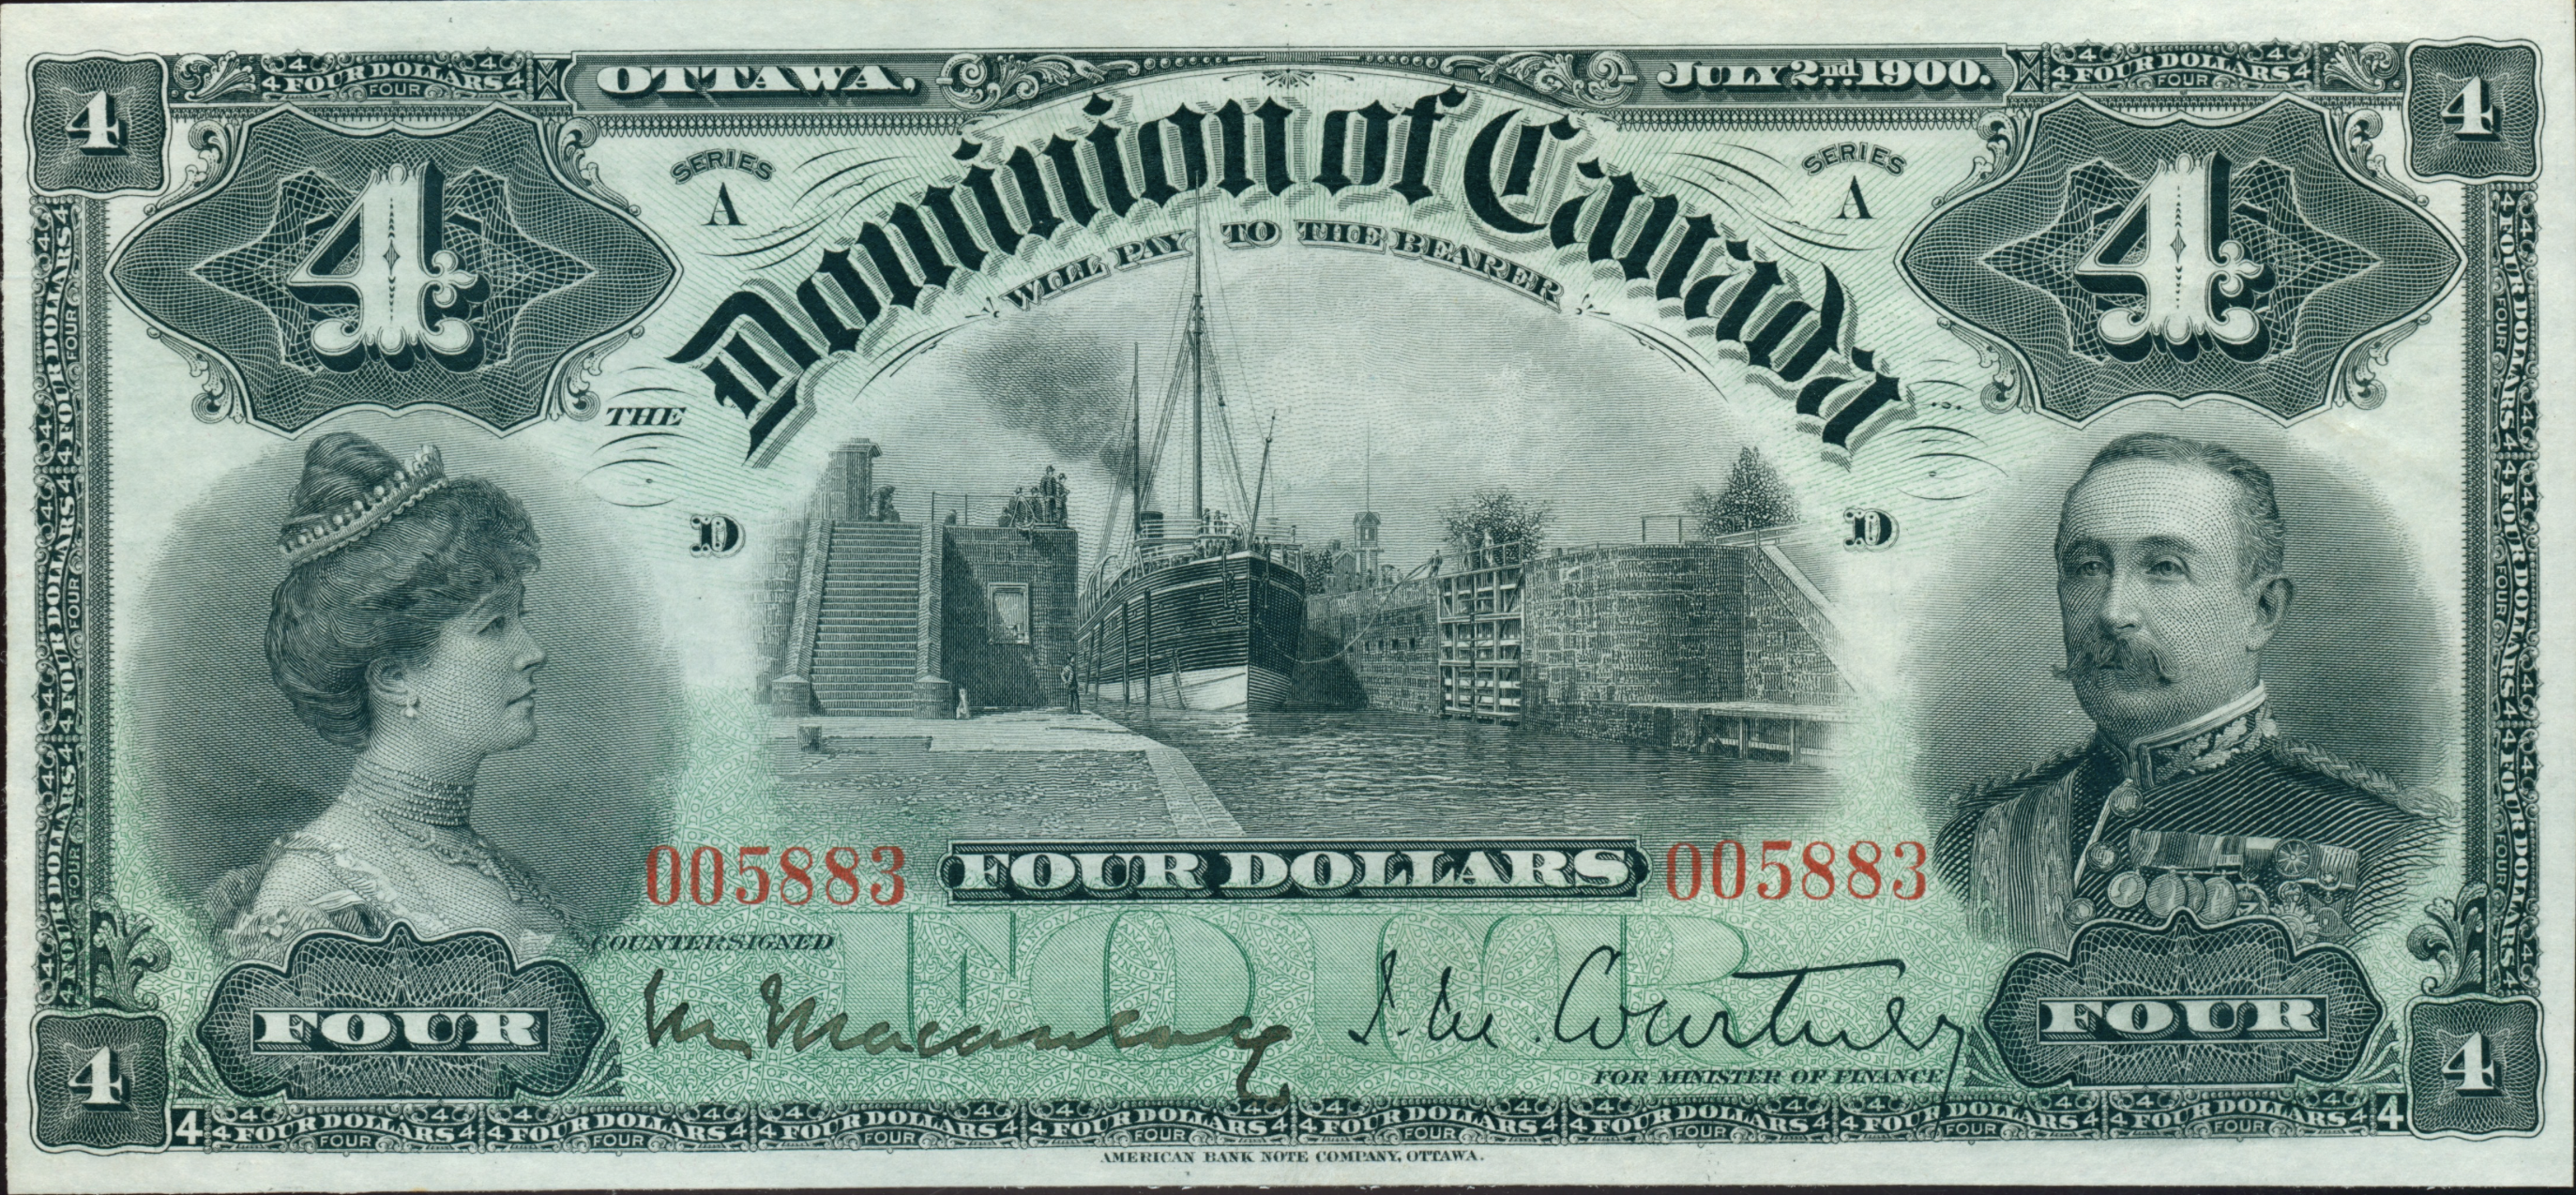 Доллар 1900 года. Доллар купюра. Старые банкноты США. Доллары 19 века. Доллар в 19 году